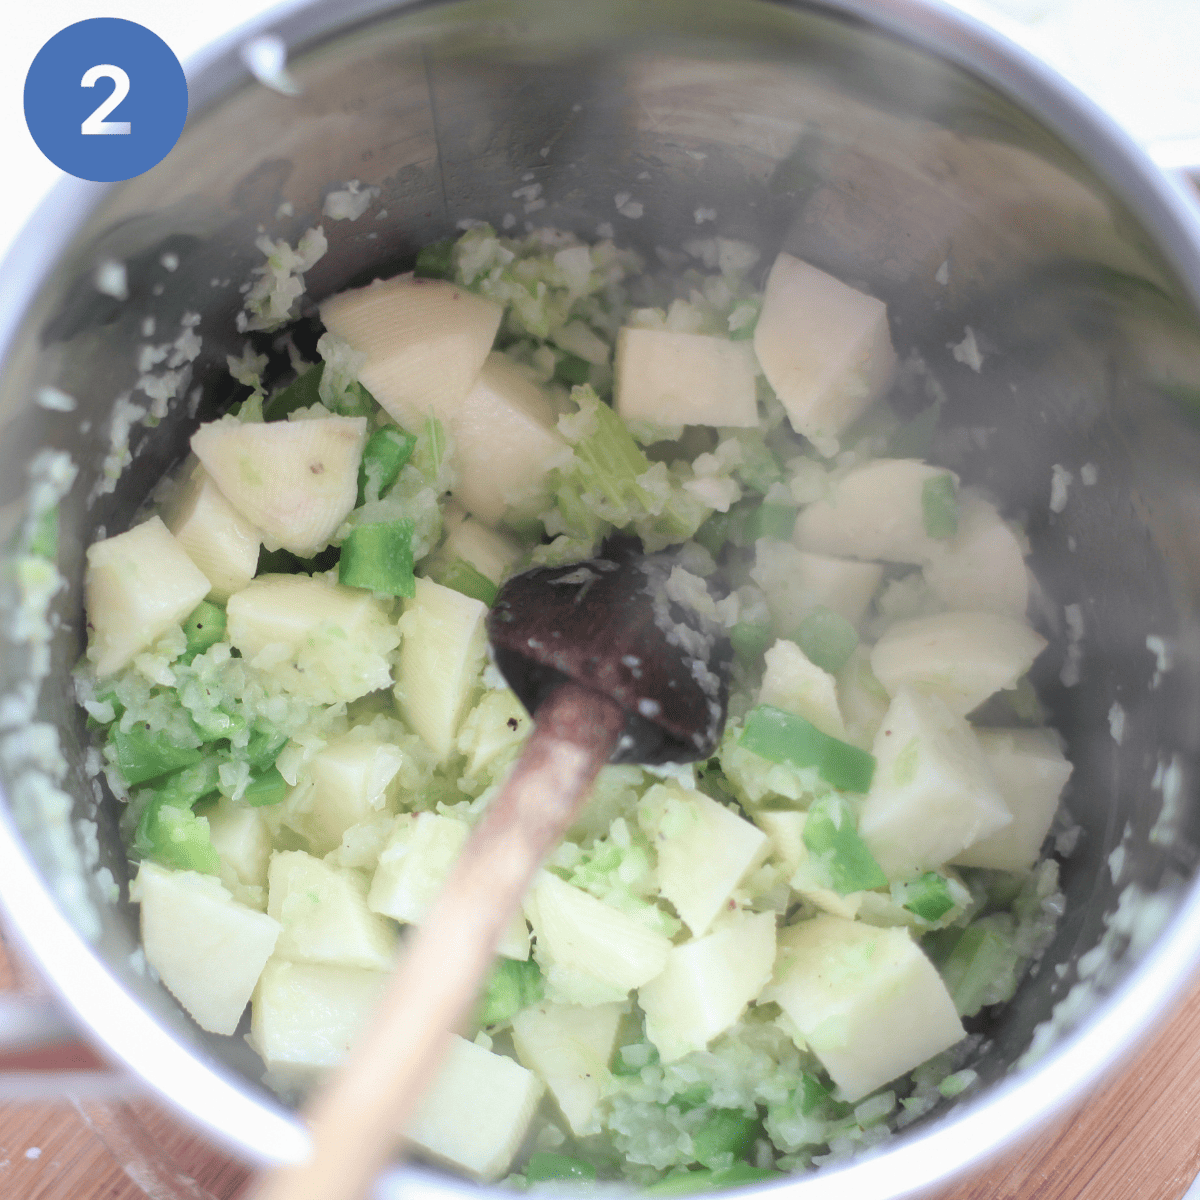 Adding diced potatoes to sauteed onion.